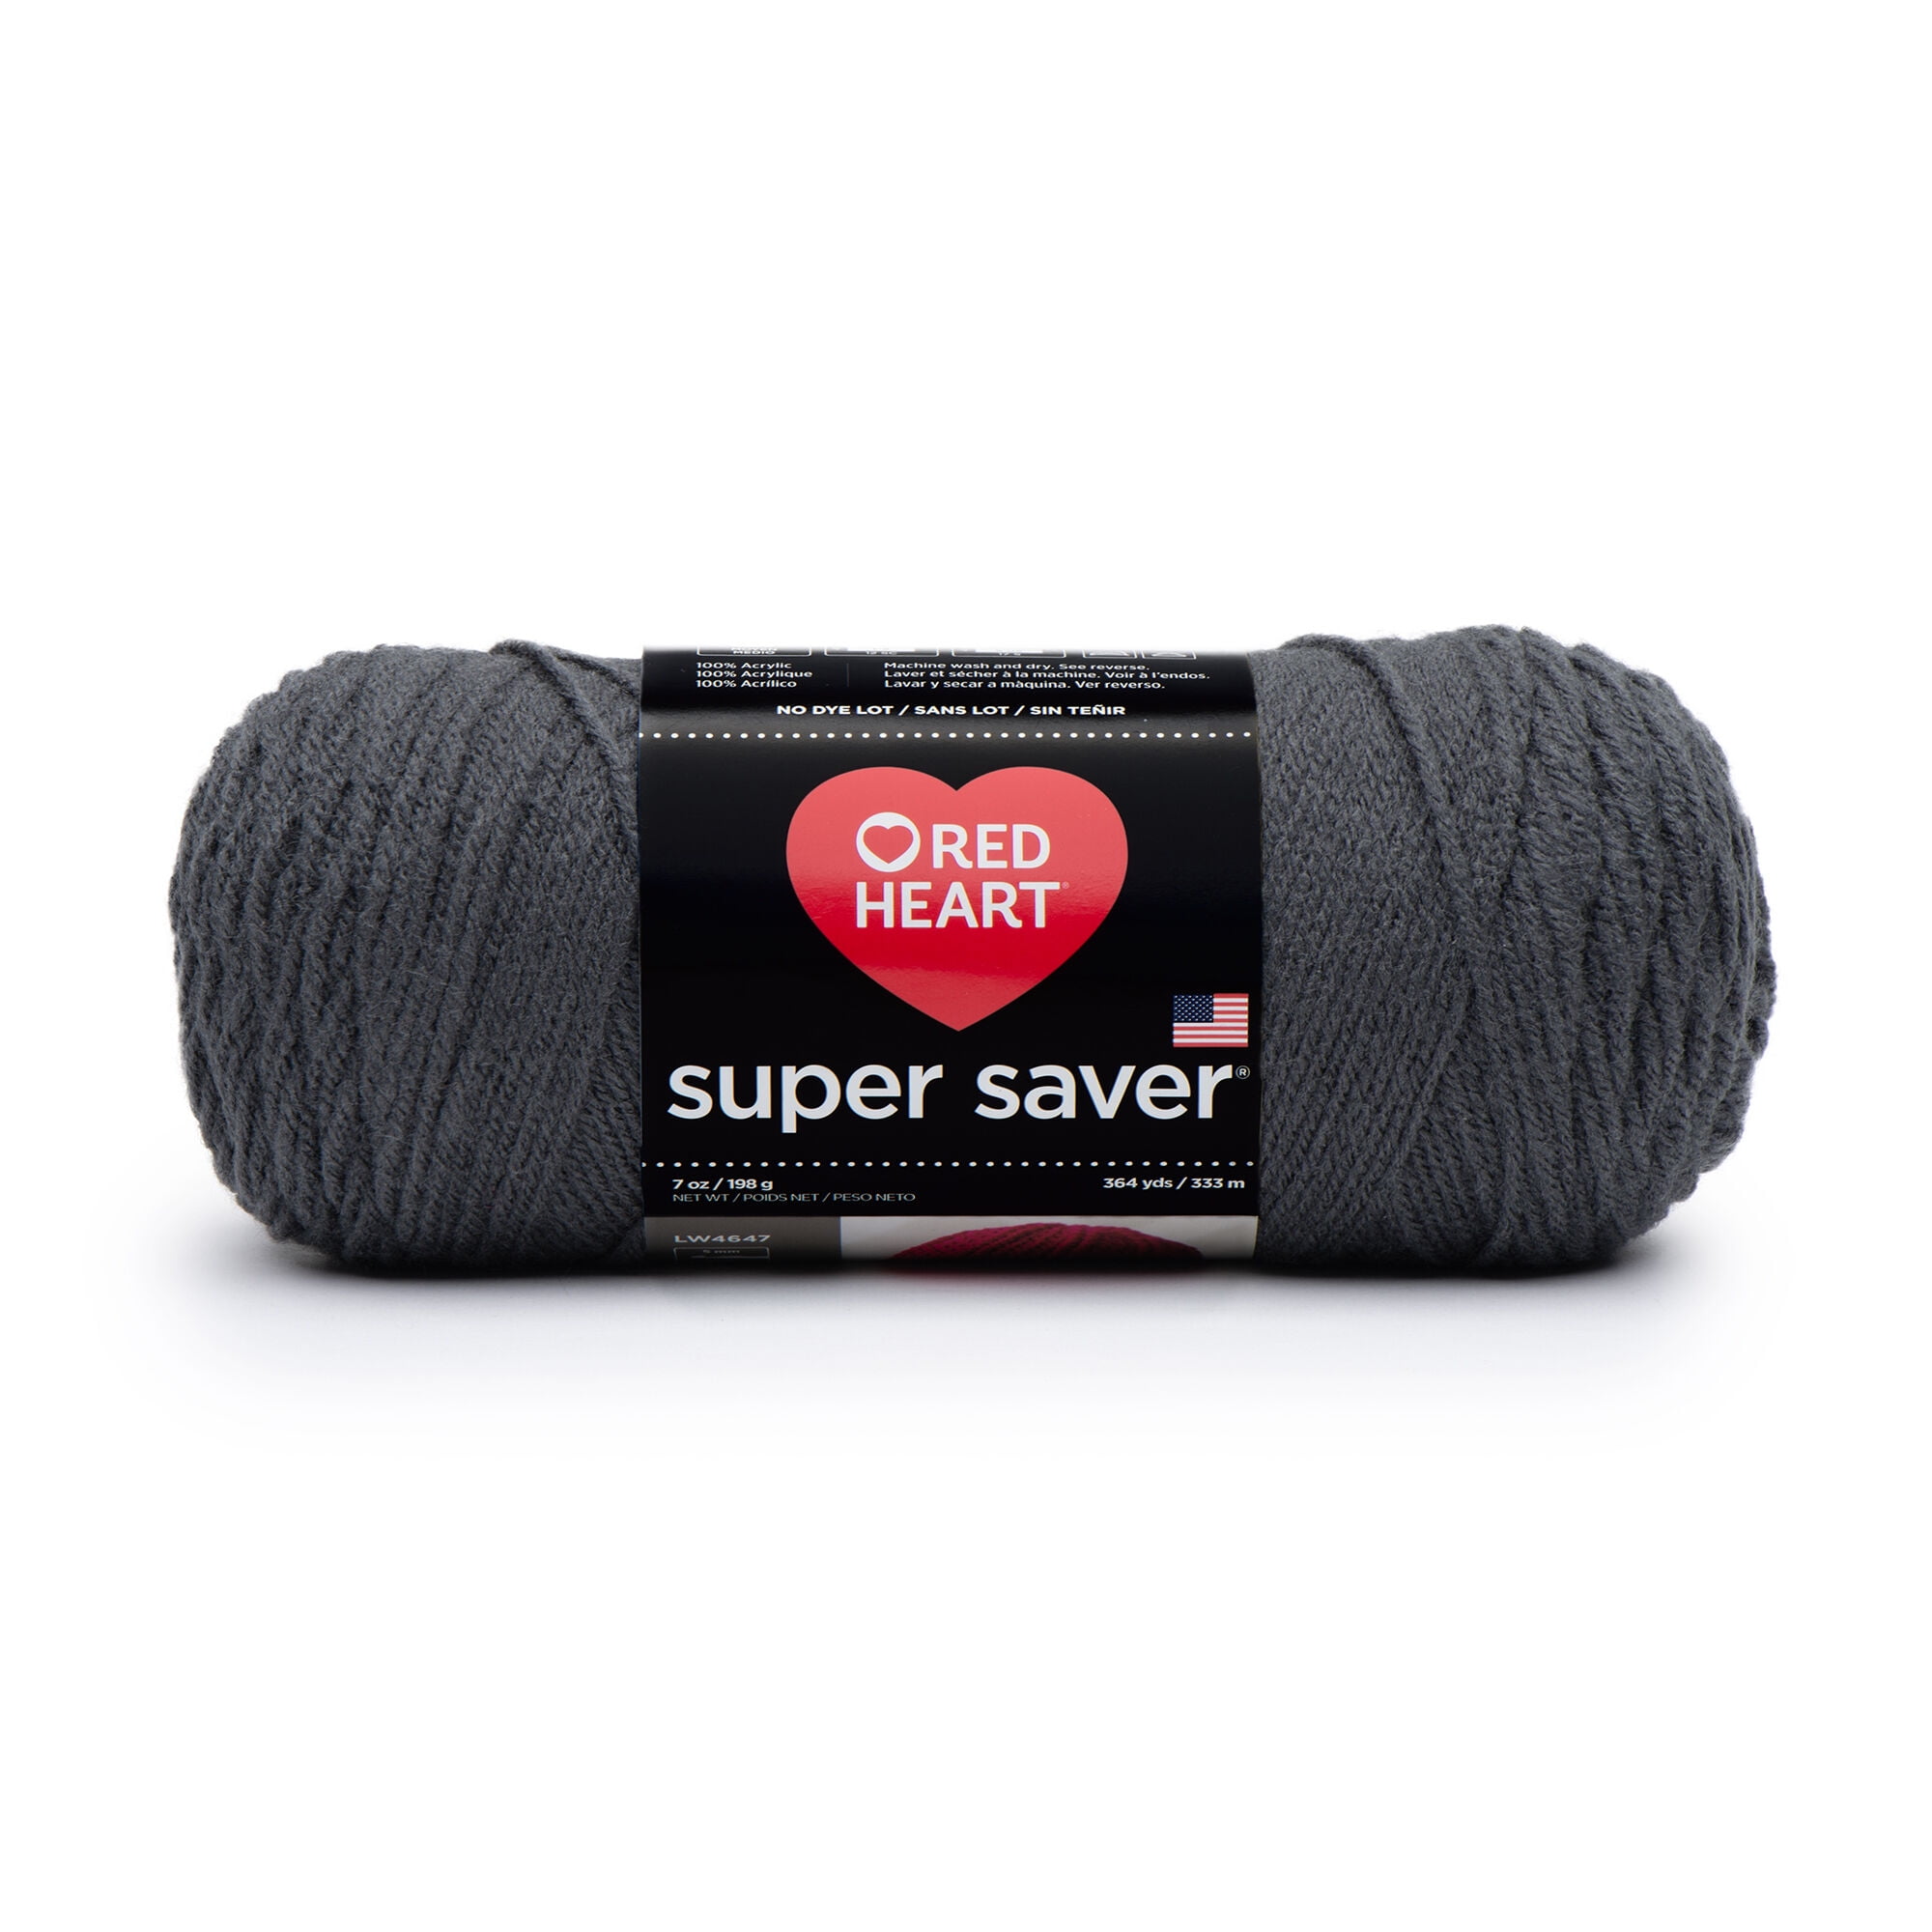 Red Heart Super Saver Yarn - Charcoal